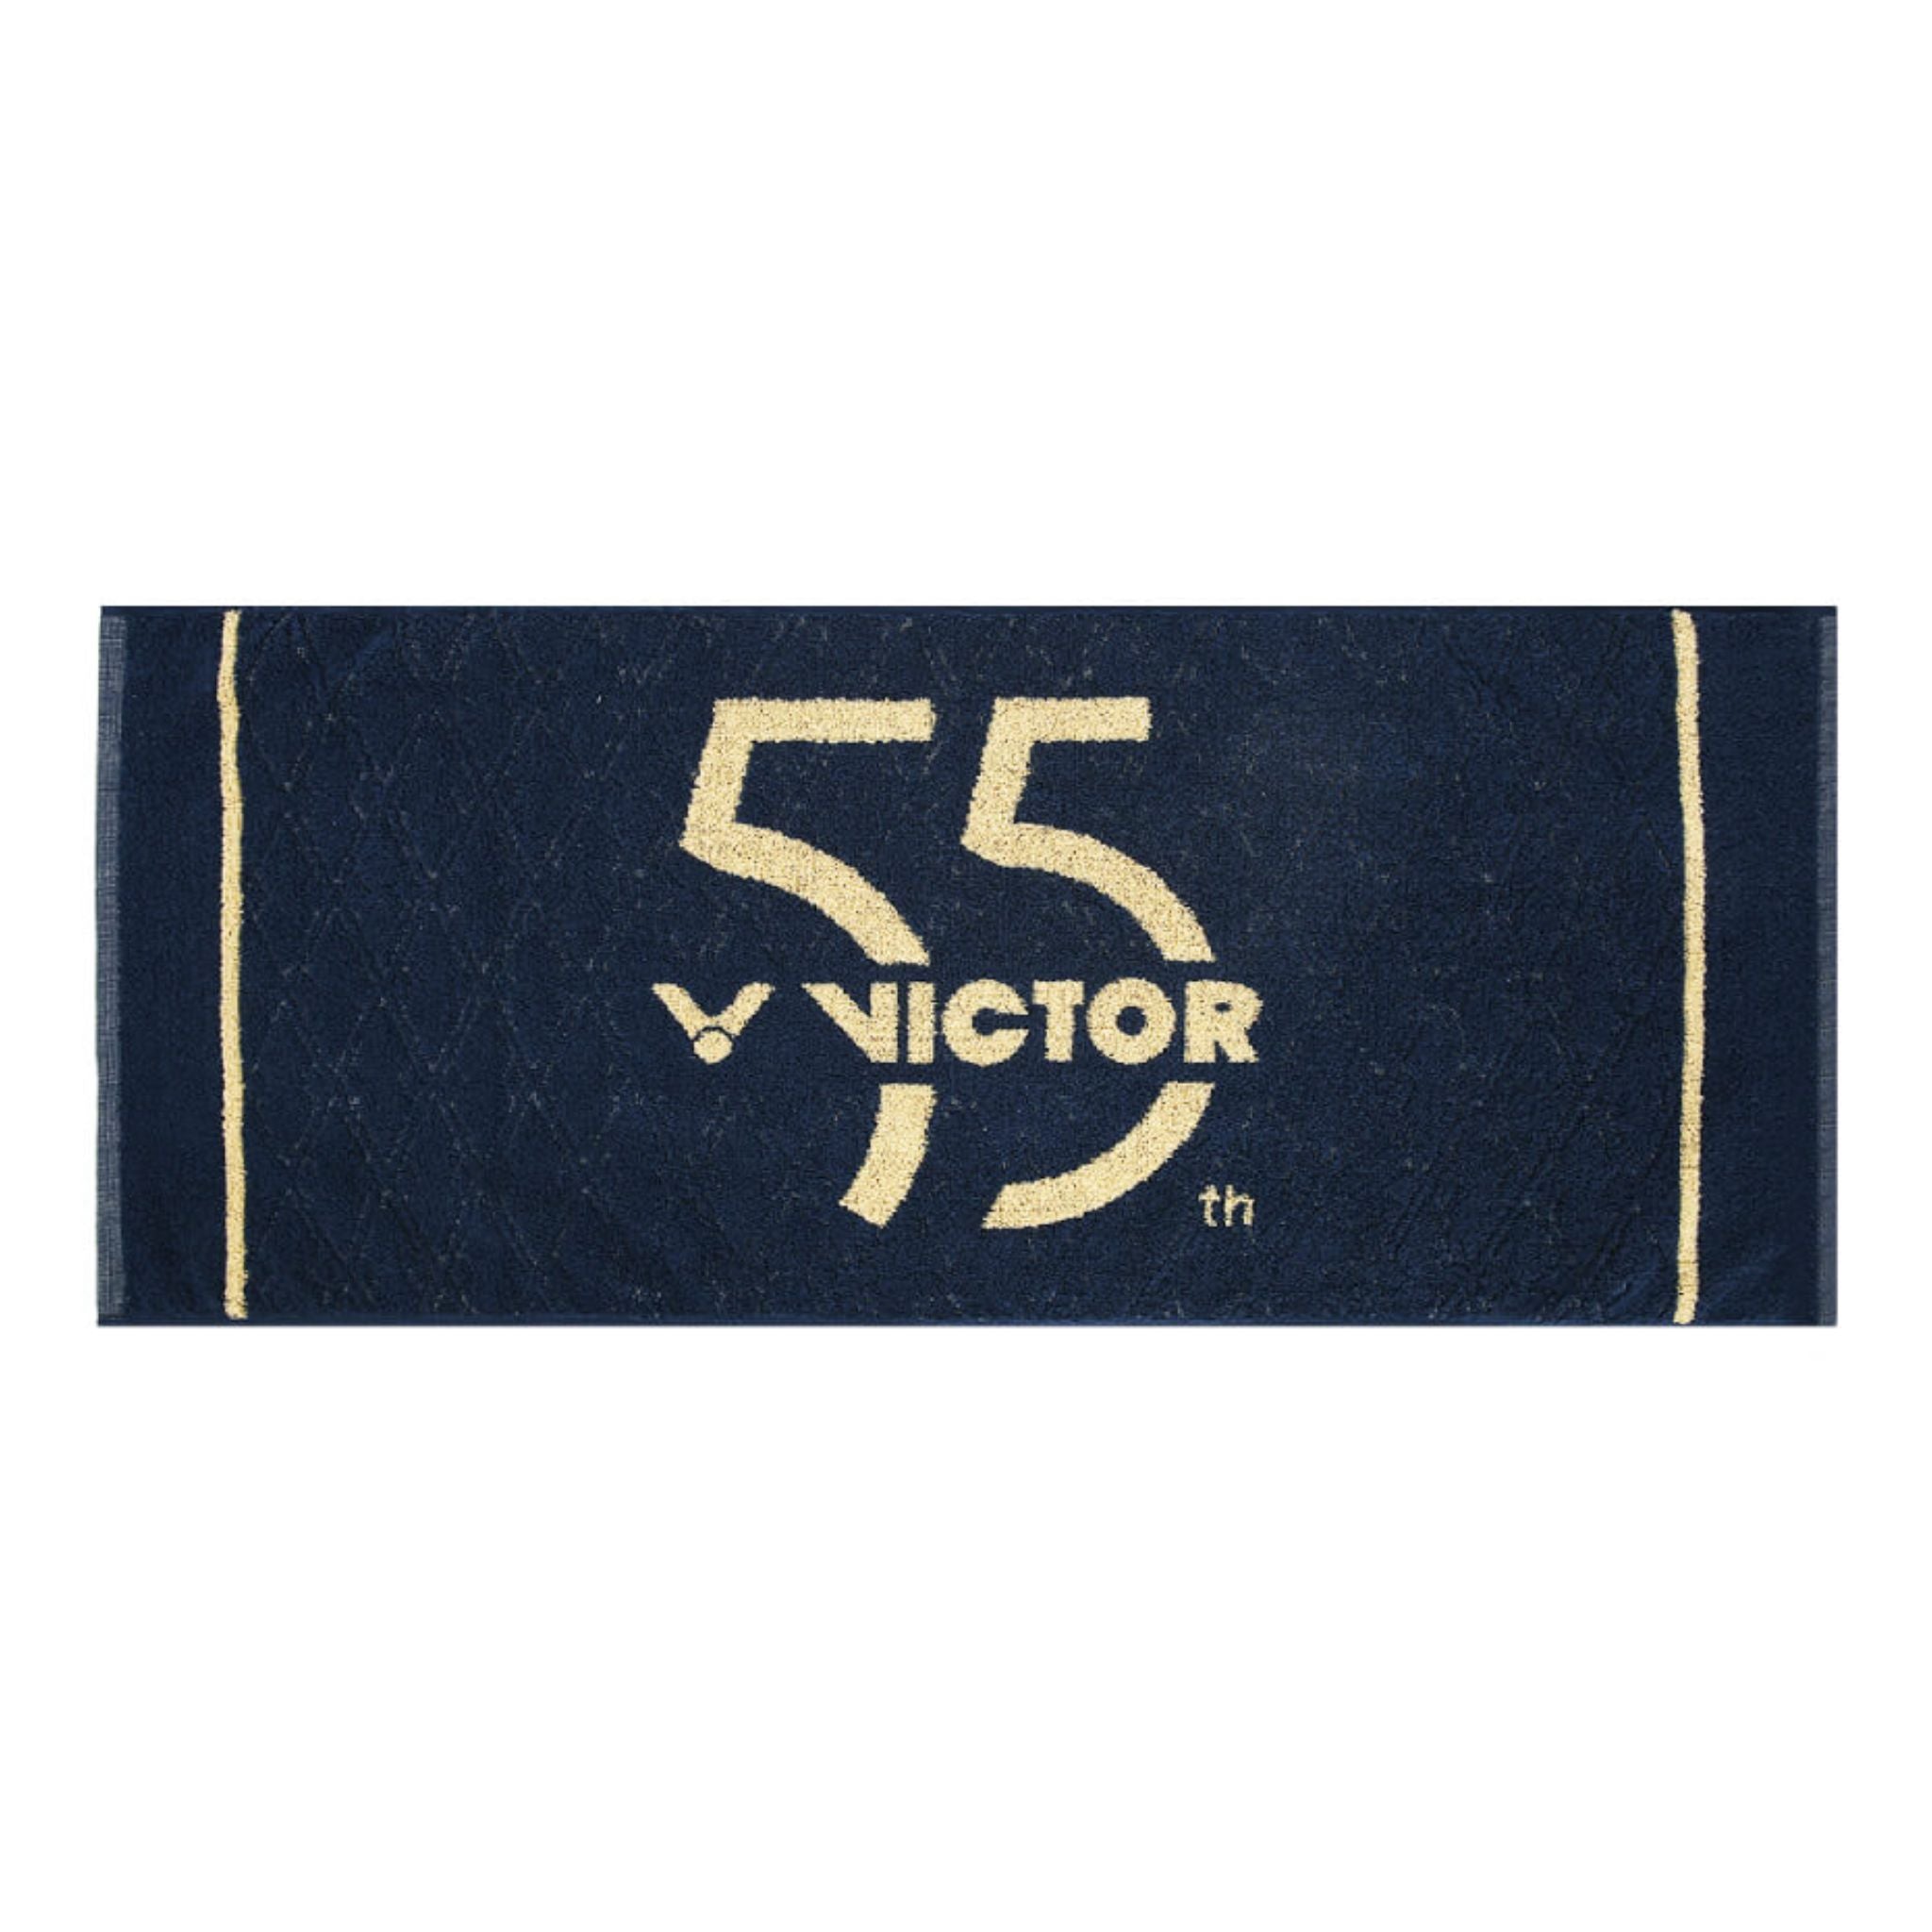 Victor 55th Anniversary Towel [Poseidon/Navy Blue] TW-55 B